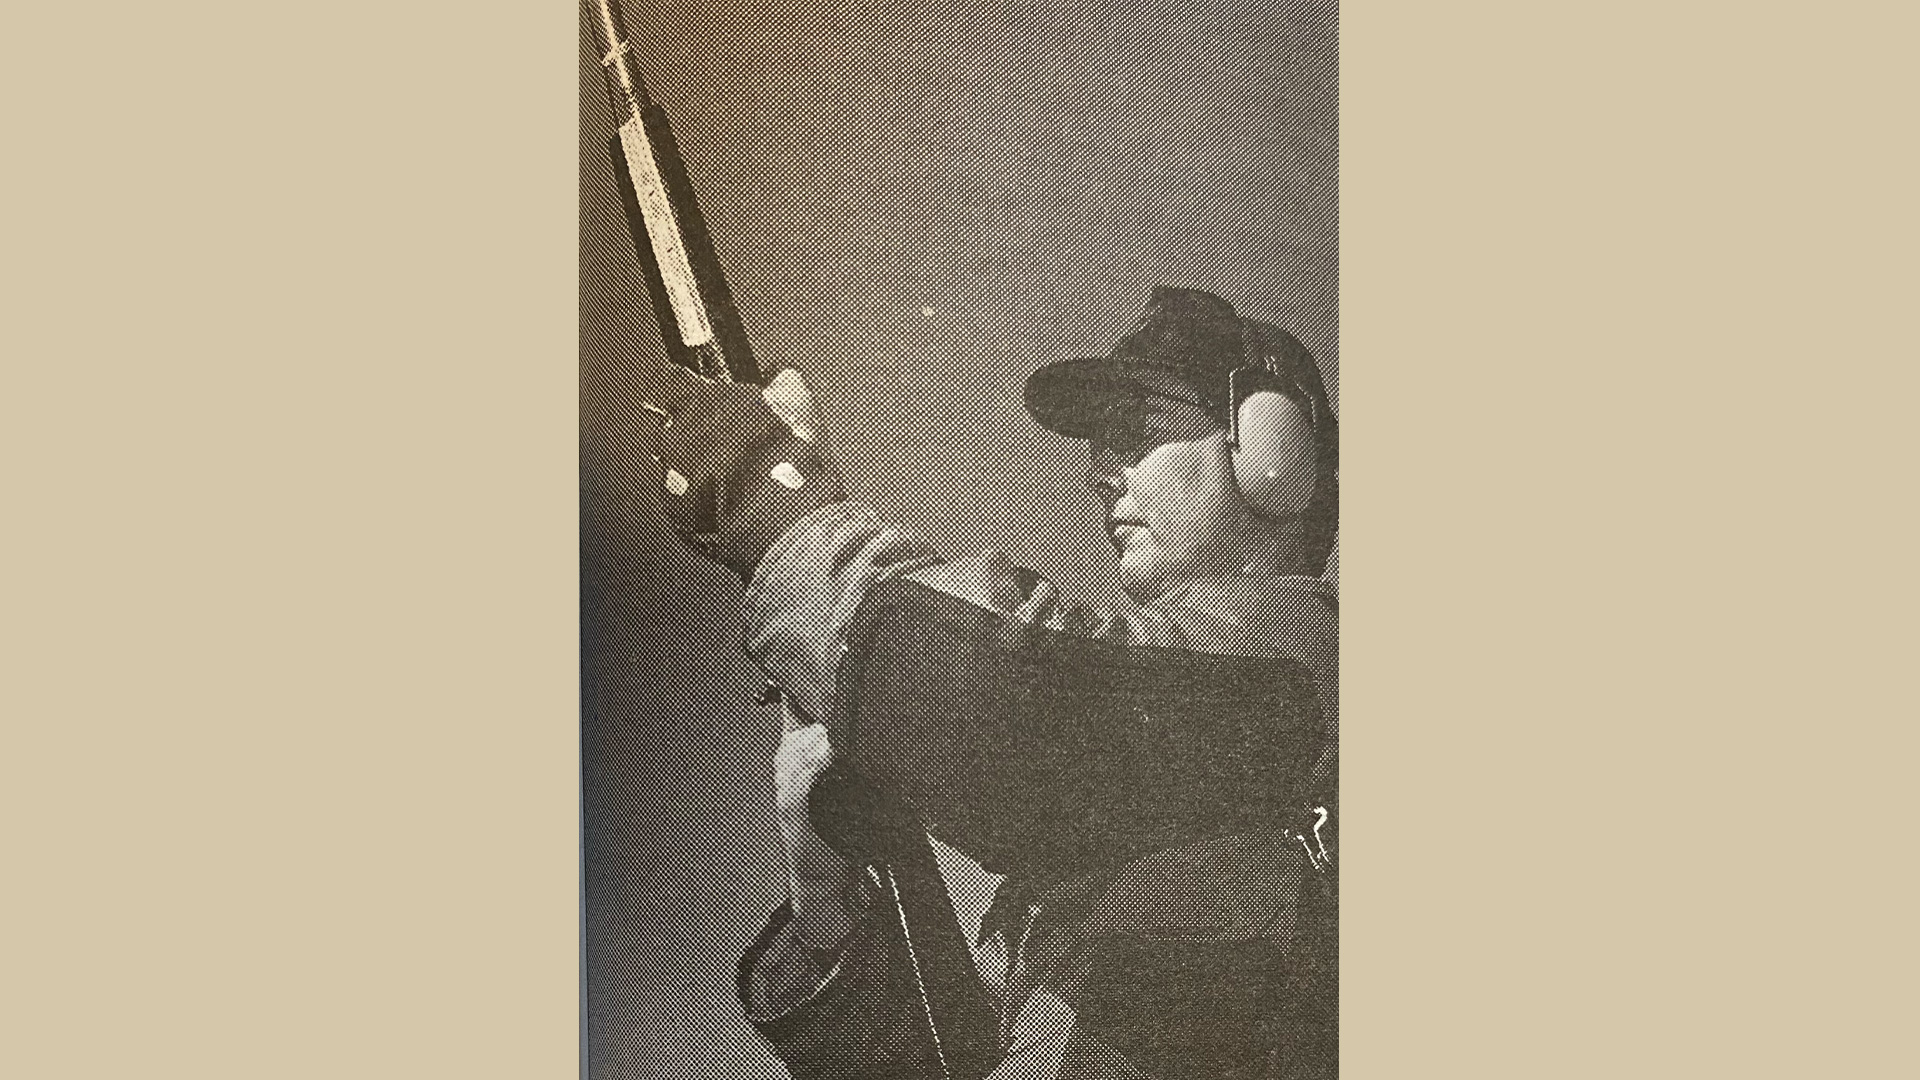 Holding a highpower rifle